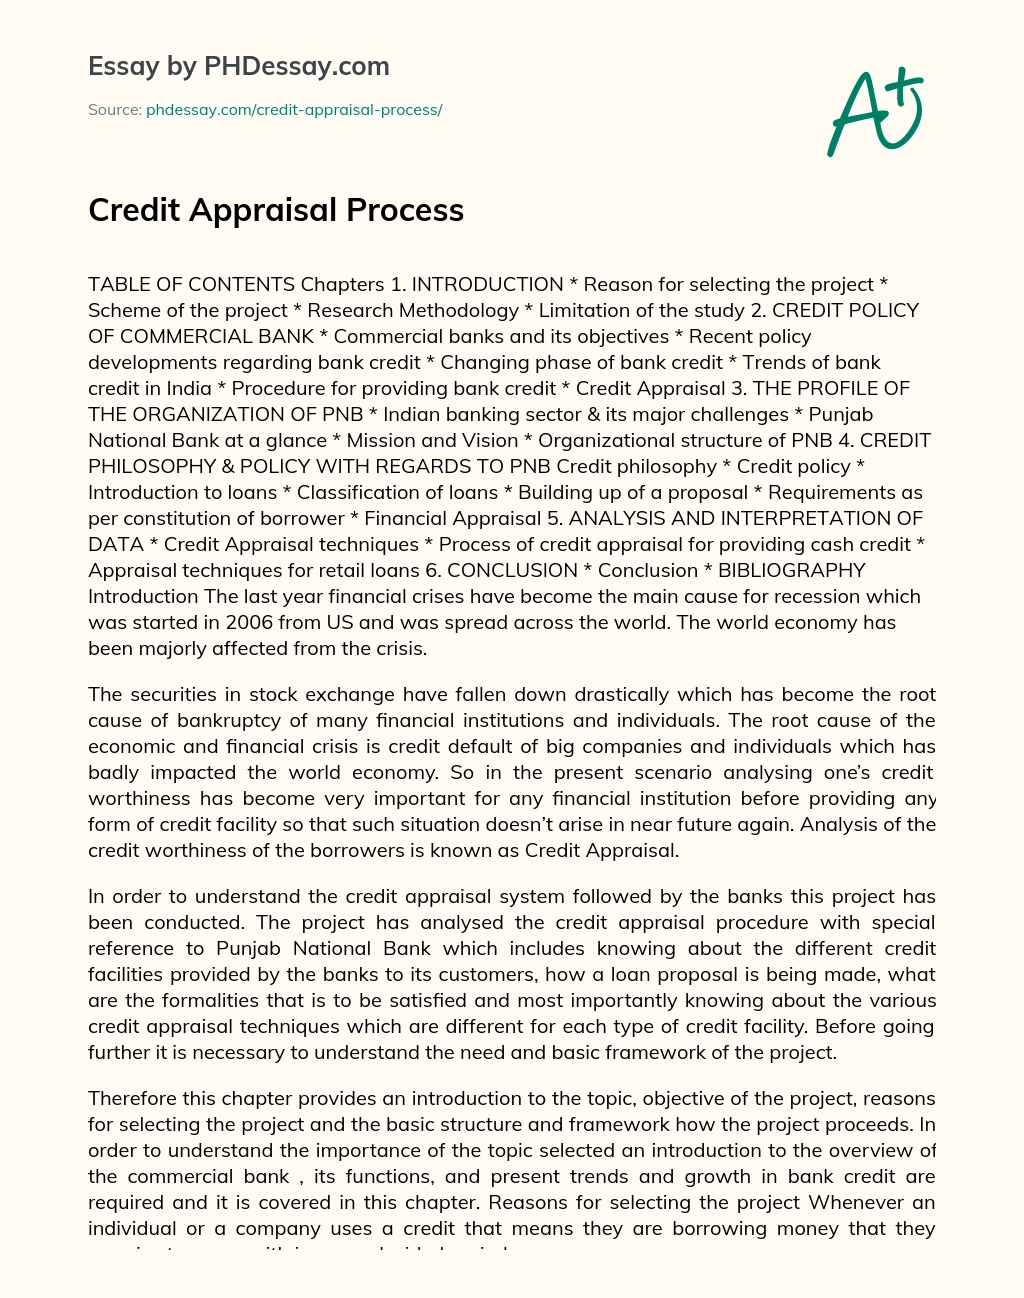 Credit Appraisal Process essay